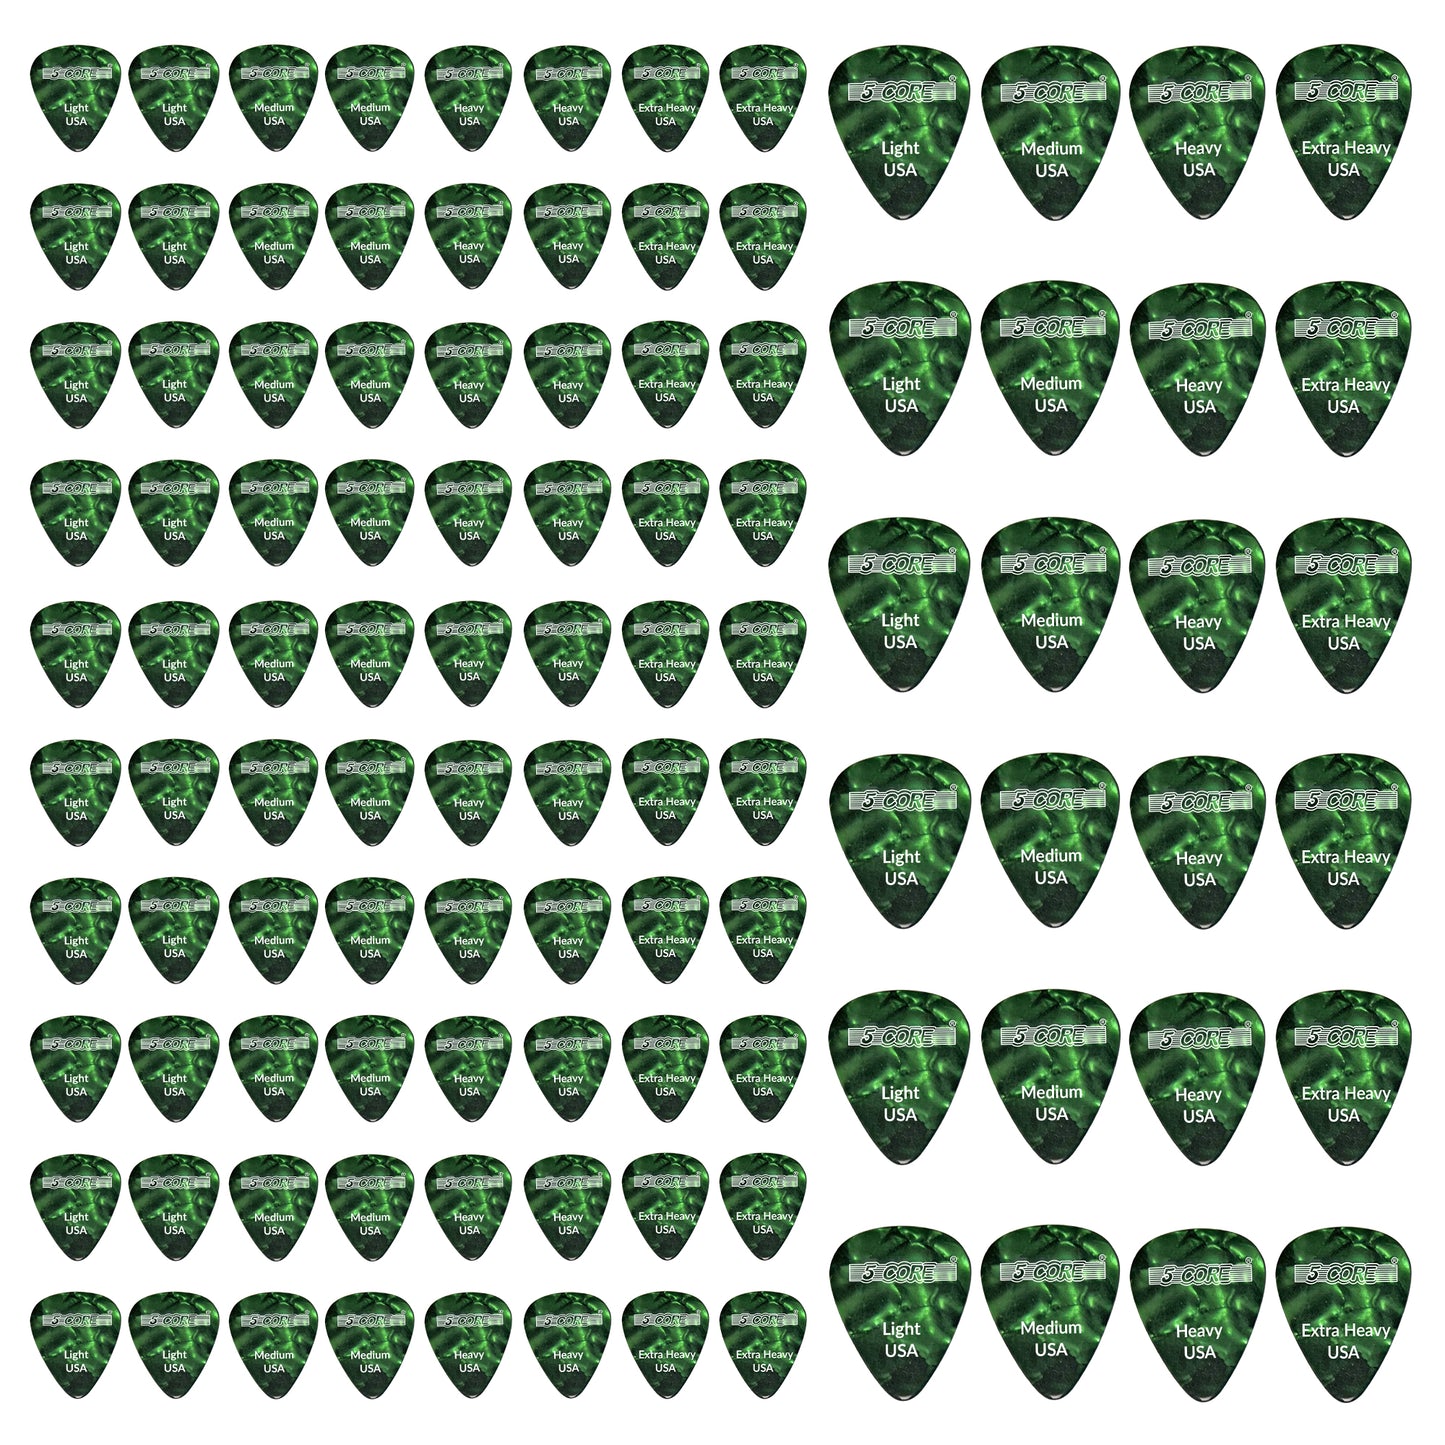 5 Core Guitar Picks | Green Color Picks for Guitar 96 Pcs | Light, Medium, Heavy, and Extra Heavy Gauge| Durable Premium Celluloid Guitar Picks 0.46mm to 1.2mm- G PICK ALL GR 96PK